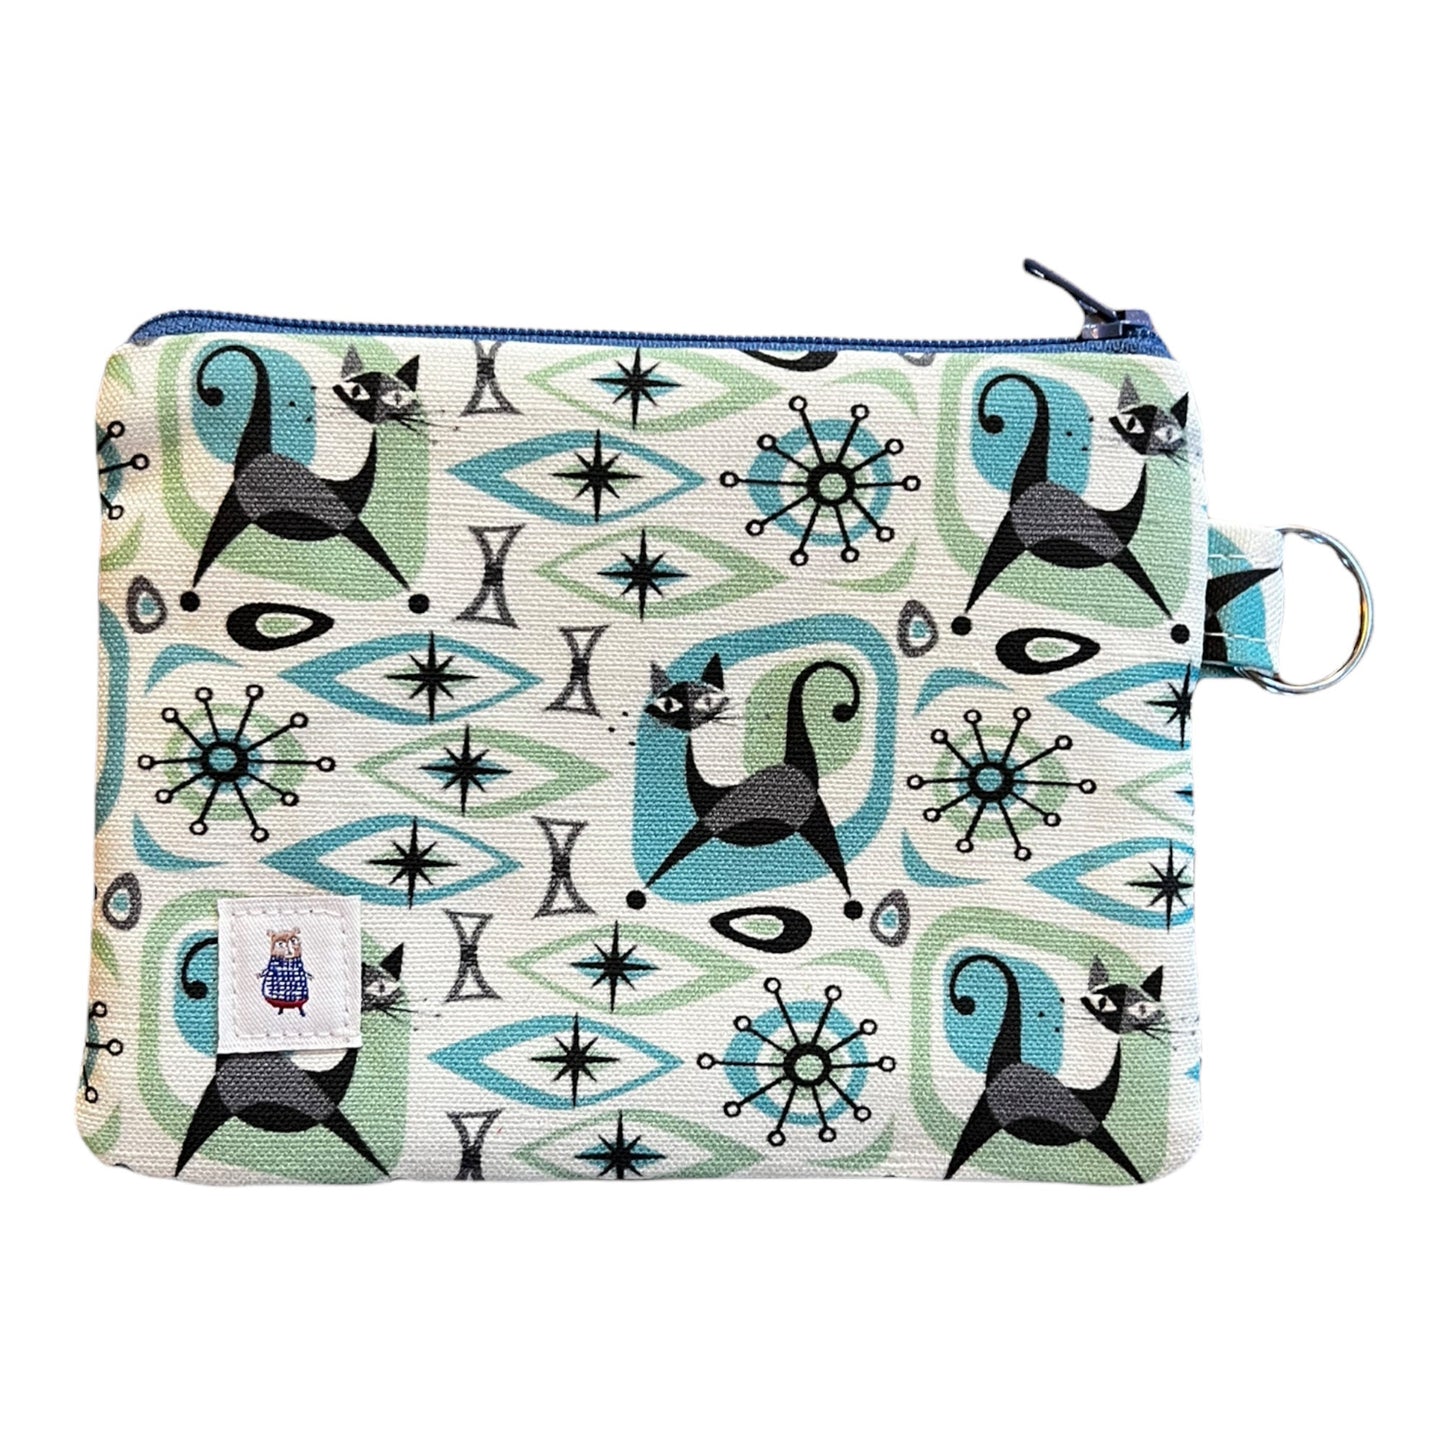 Atomic cat coin purse, cat print pouch, black cat money purse, linen and cotton zipper bag, 6" x 4.5"